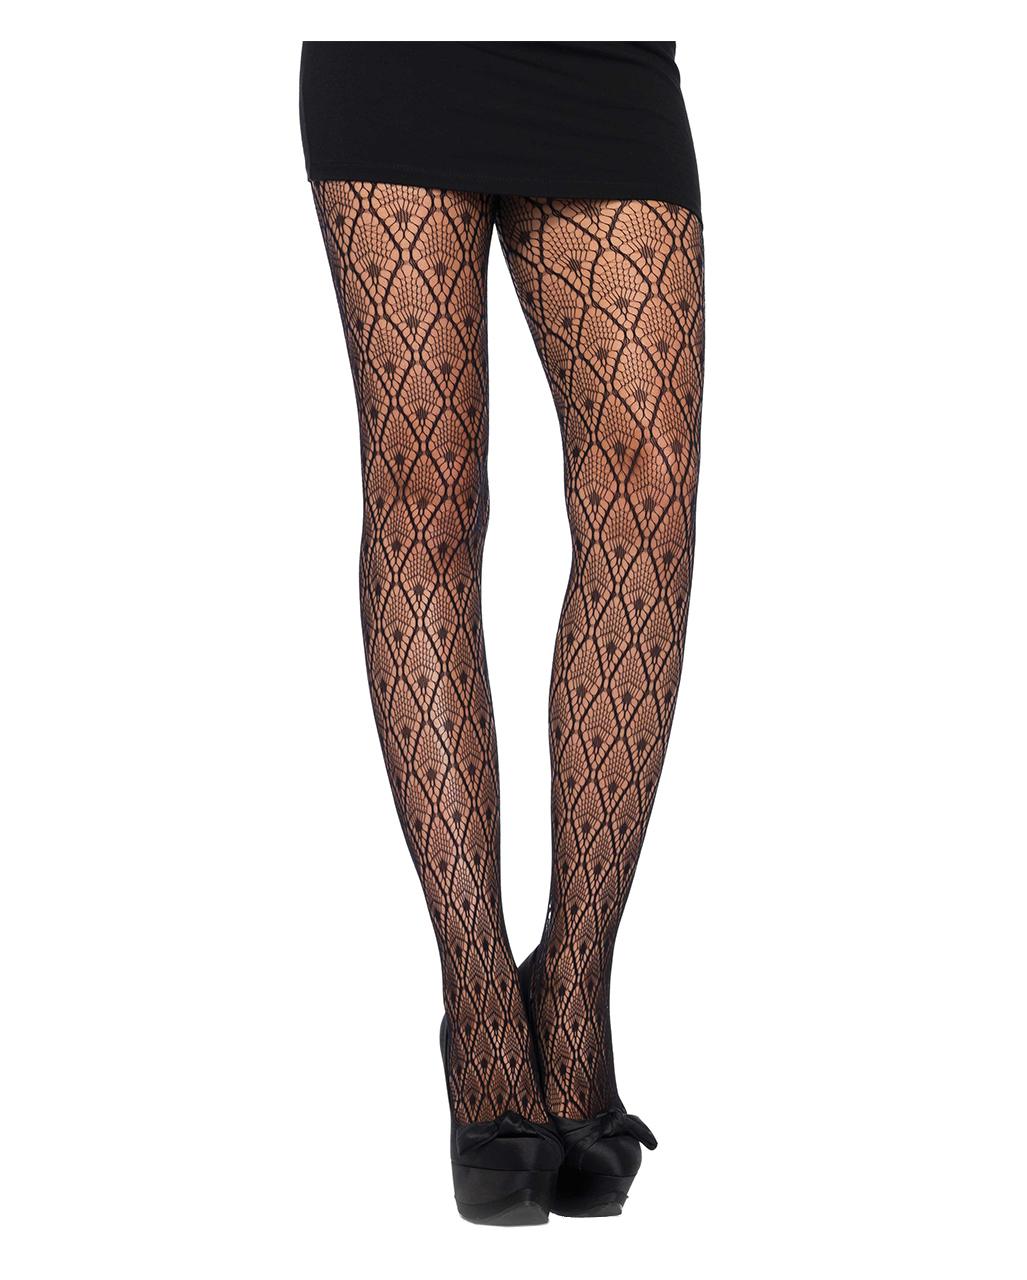 Patterned Lace Pantyhose Black Buy NOW | Horror-Shop.com